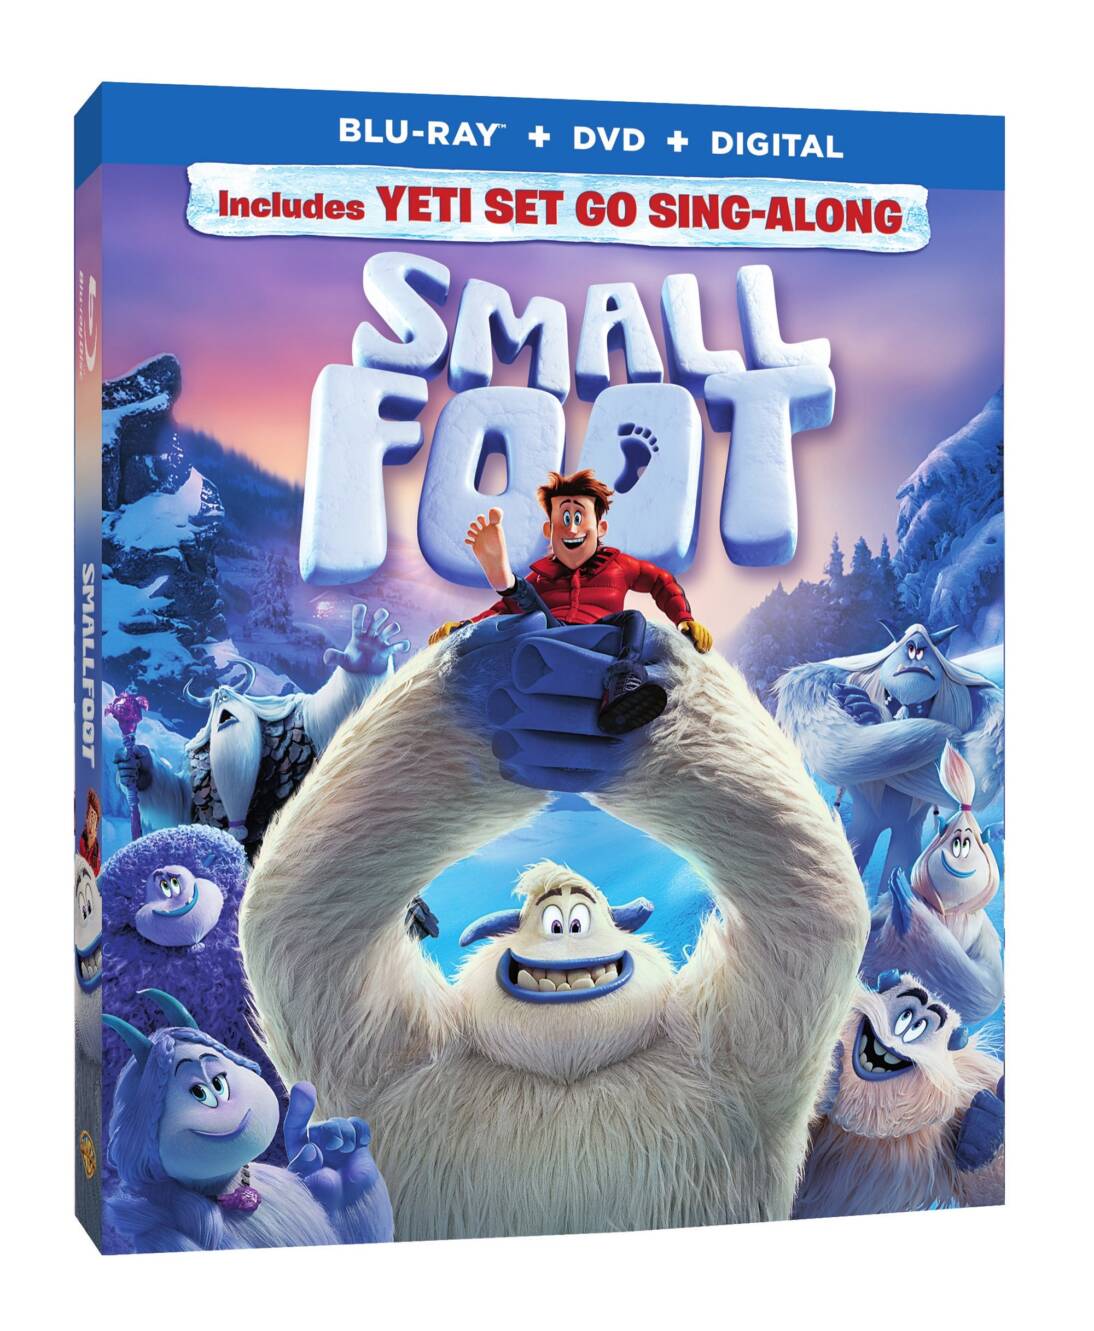 SMALLFOOT Arrives Digitally & on DVD + Blu-ray